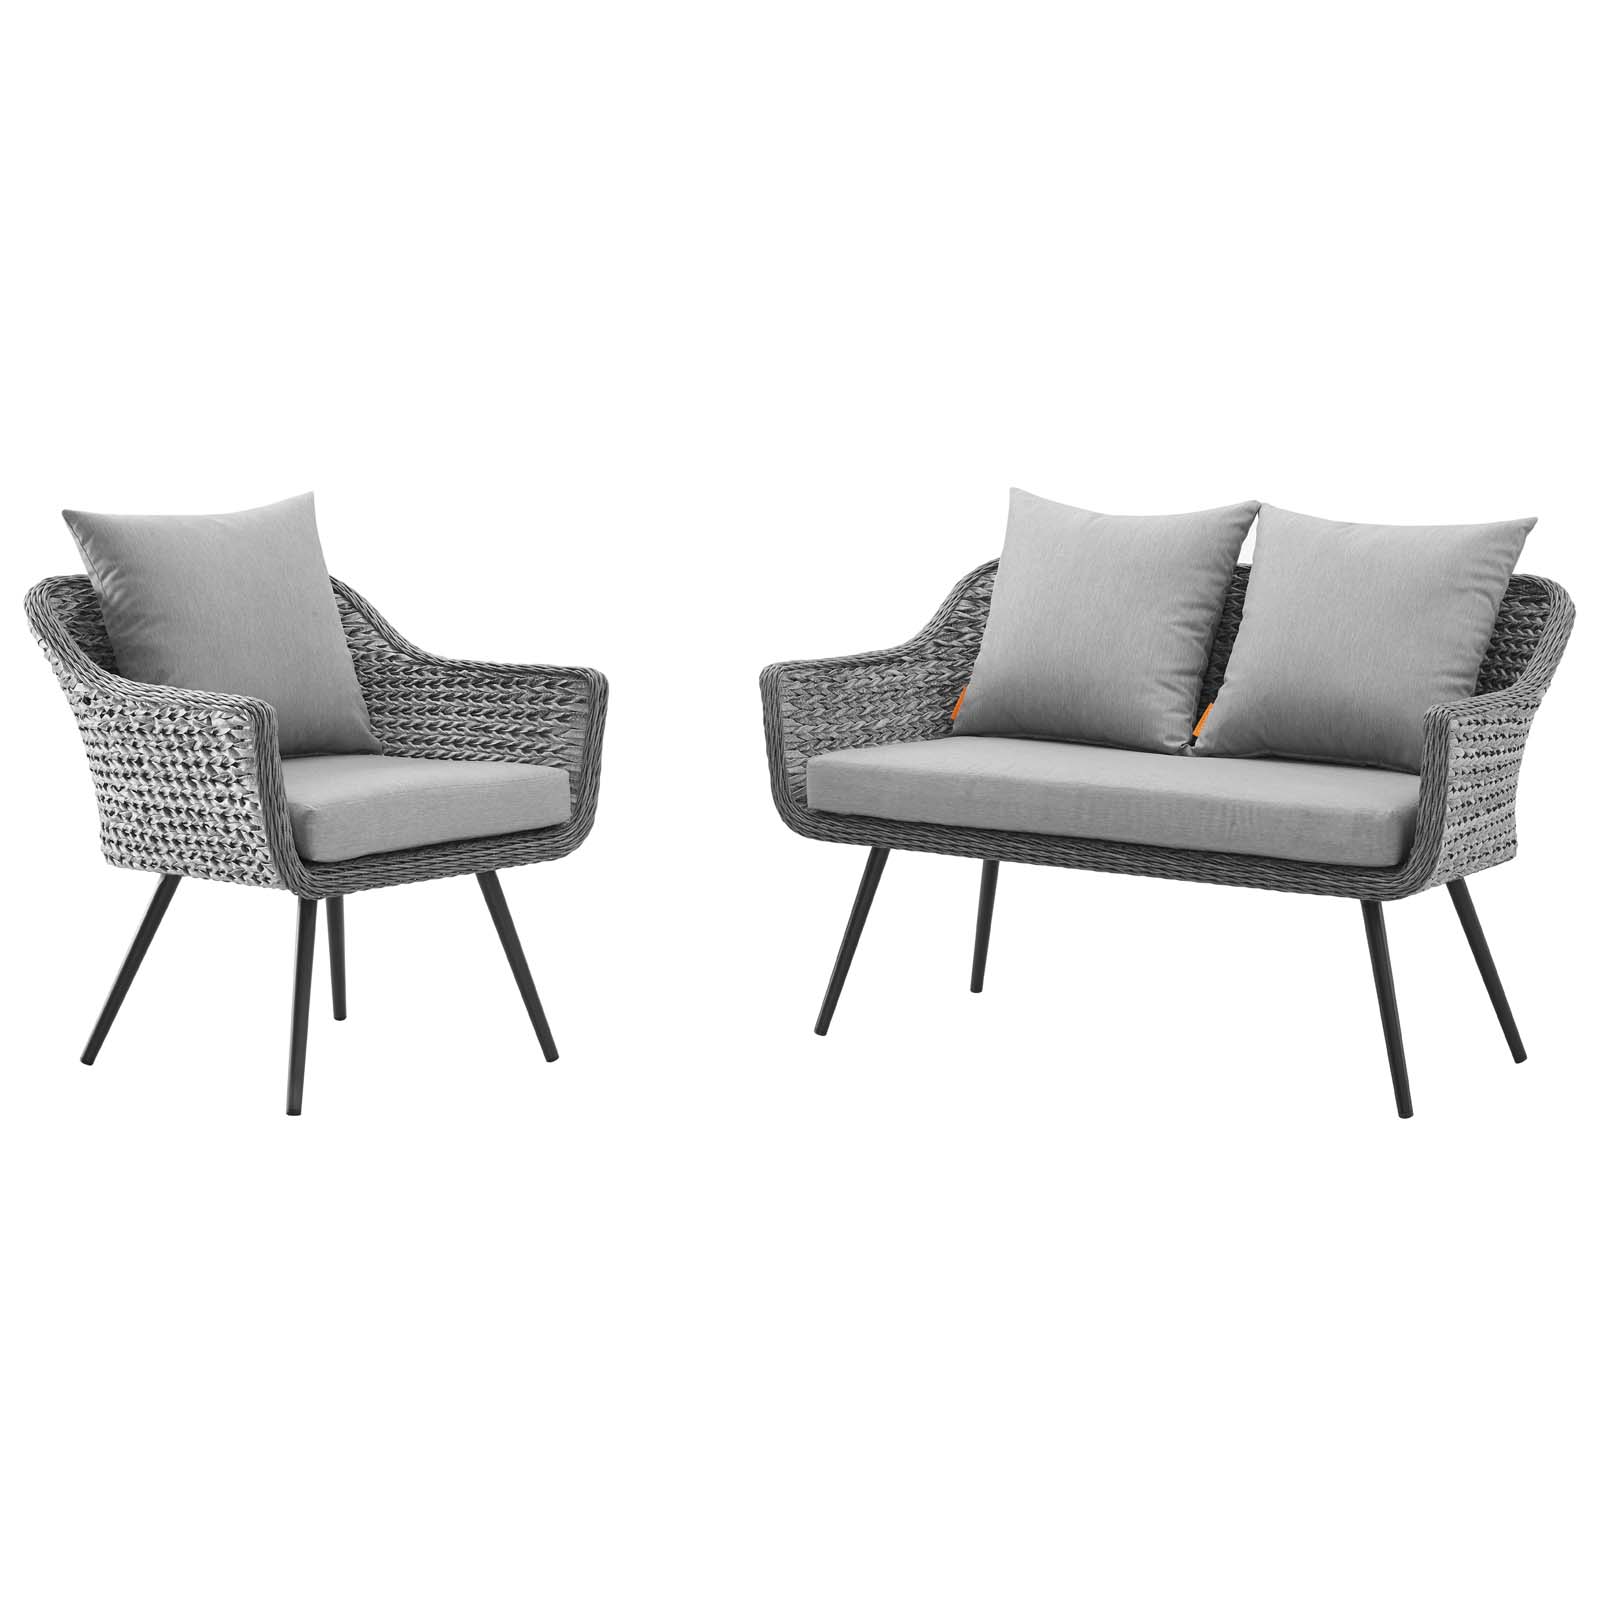 Contemporary Modern Urban Designer Outdoor Patio Balcony Garden Furniture Lounge Sofa and Chair Set, Aluminum Fabric Wicker Rattan, Grey Gray - image 1 of 8